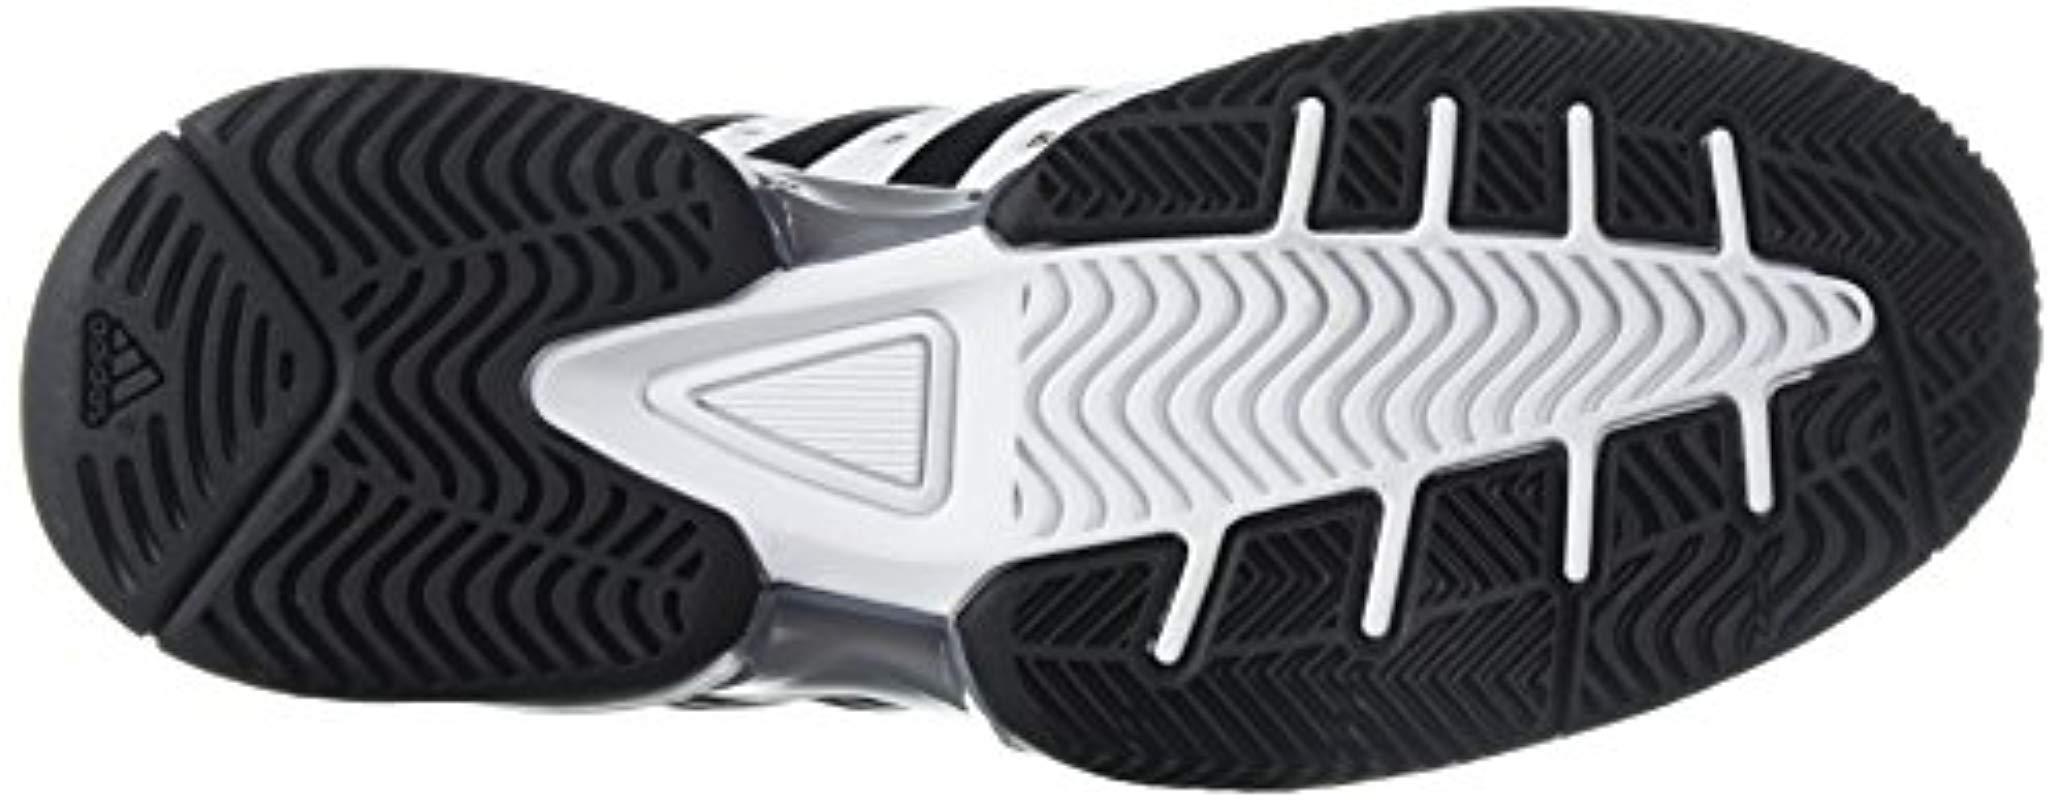 adidas Barricade Classic Wide 4e Tennis Shoe,white/black/mid Us for Men |